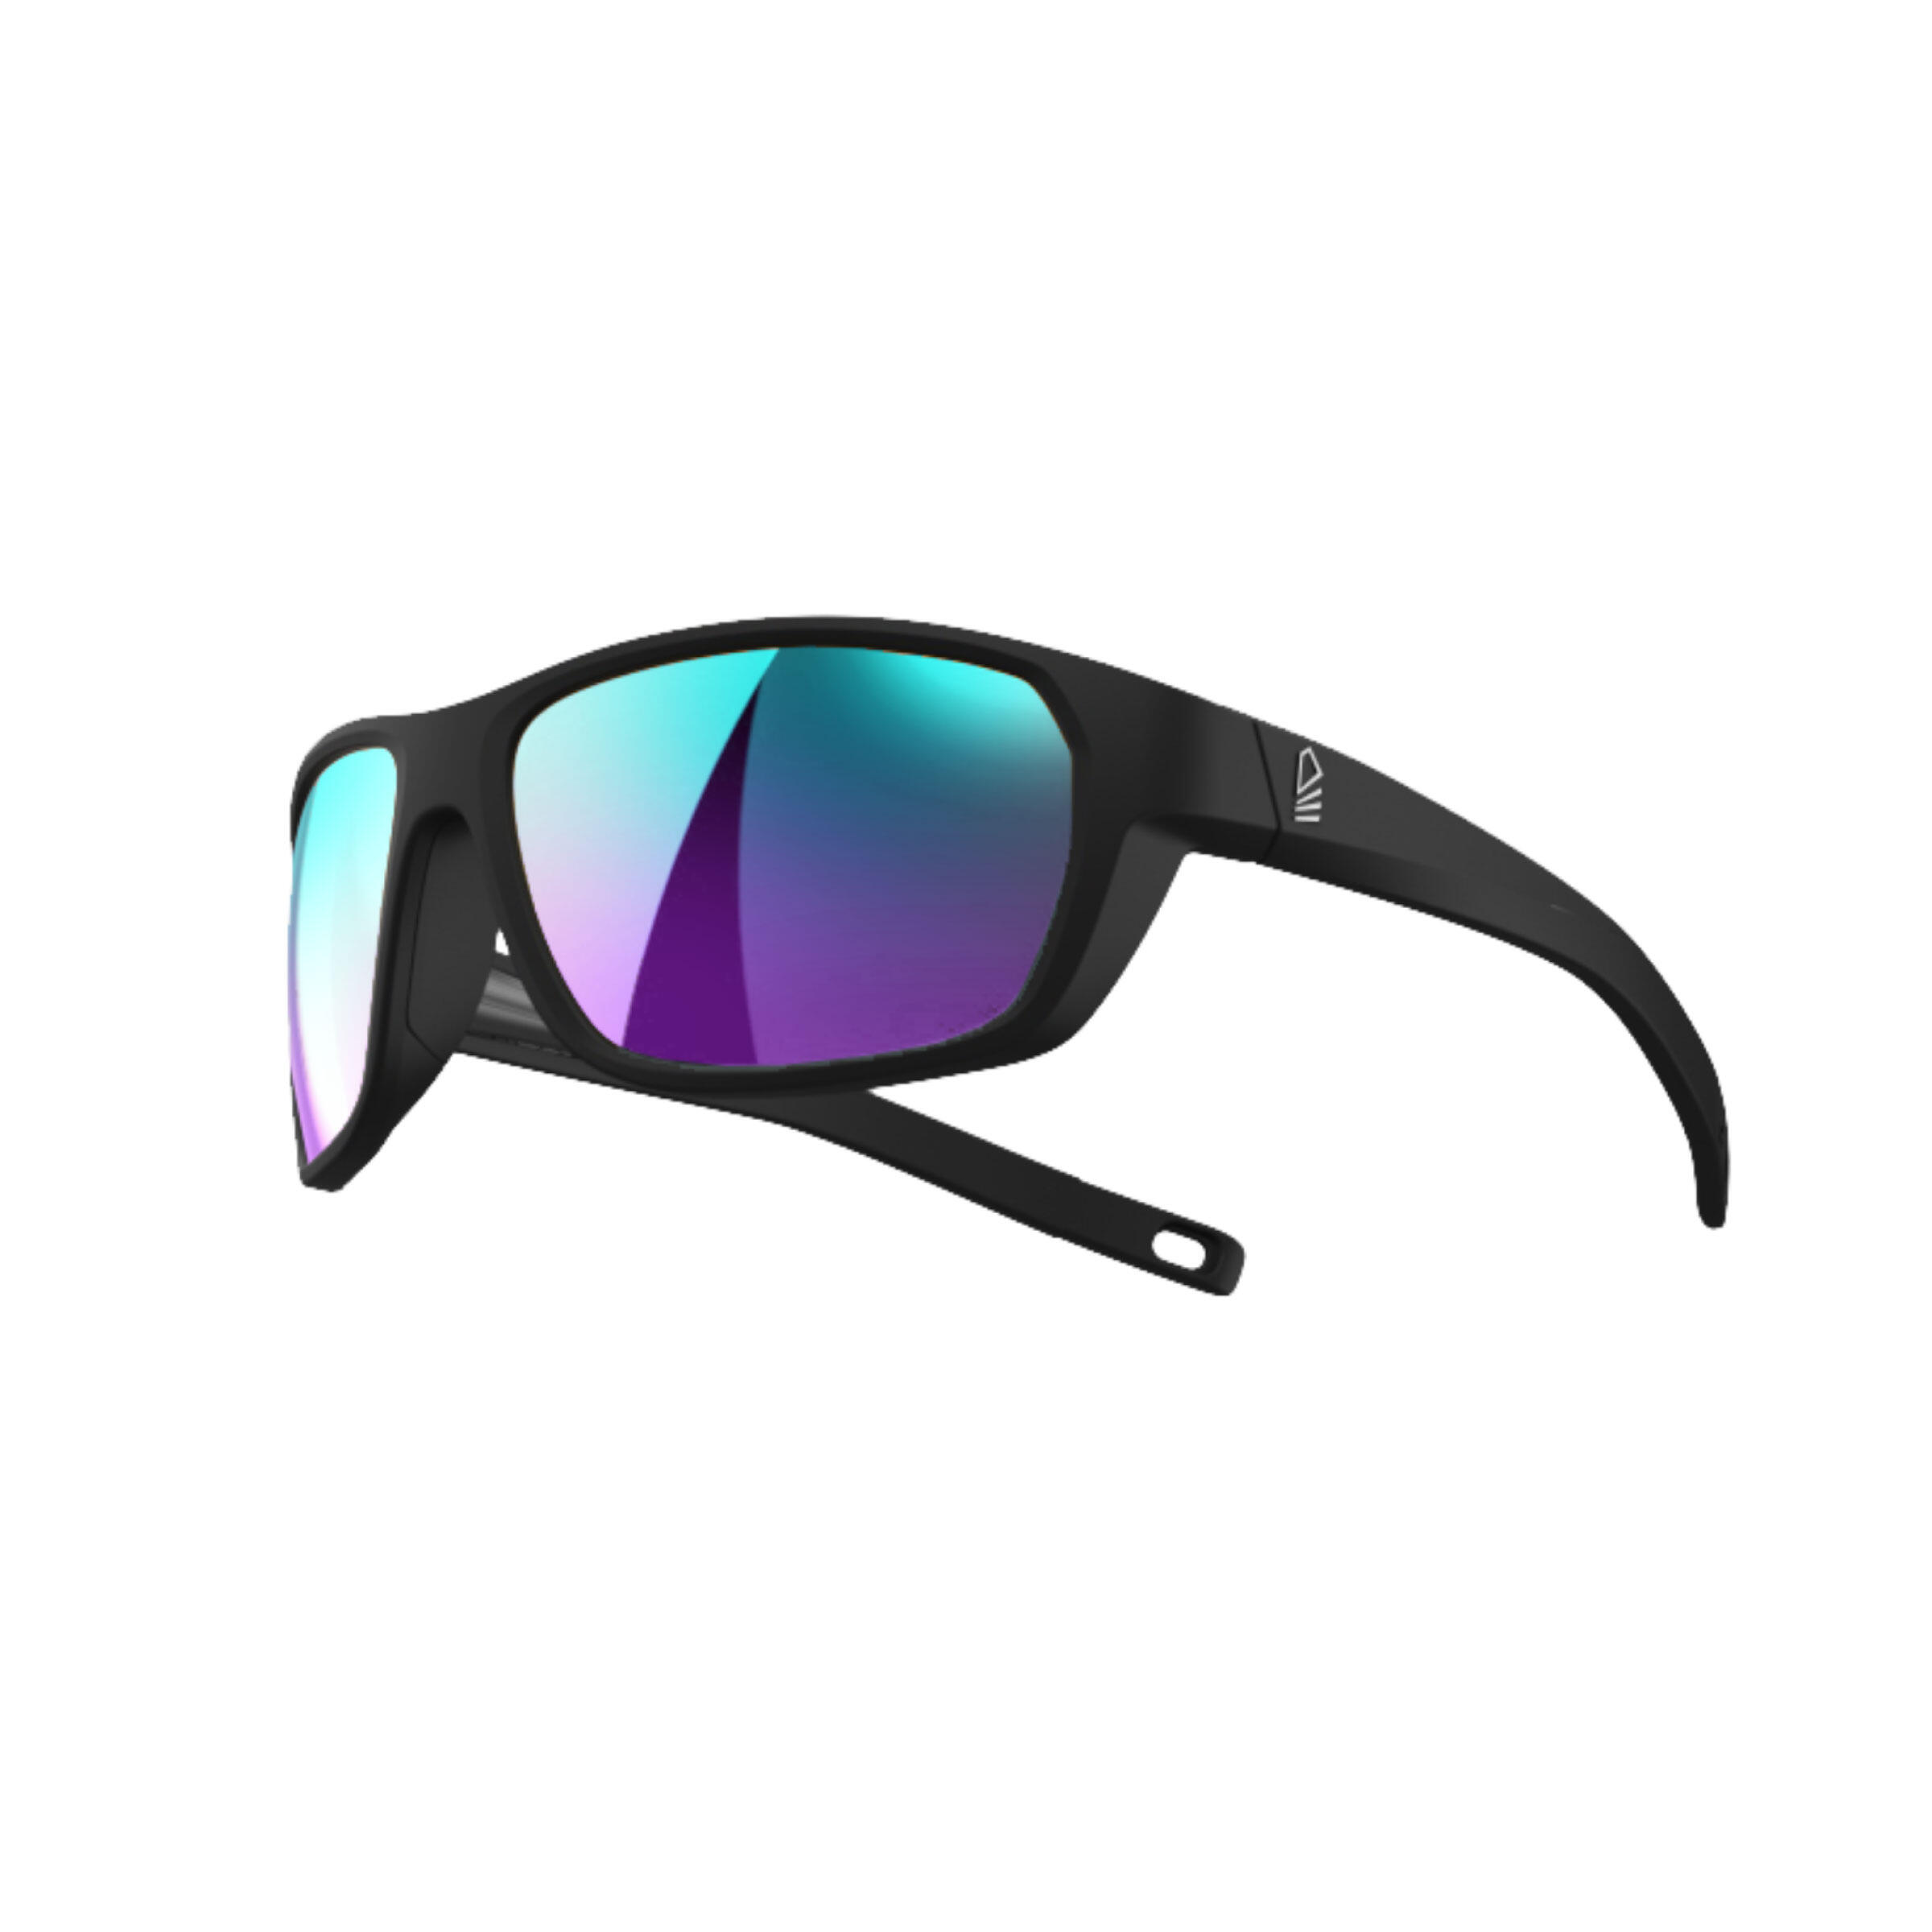 Adult Sailing Floating Polarised Sunglasses 500 - Size M Boreal Black 1/1